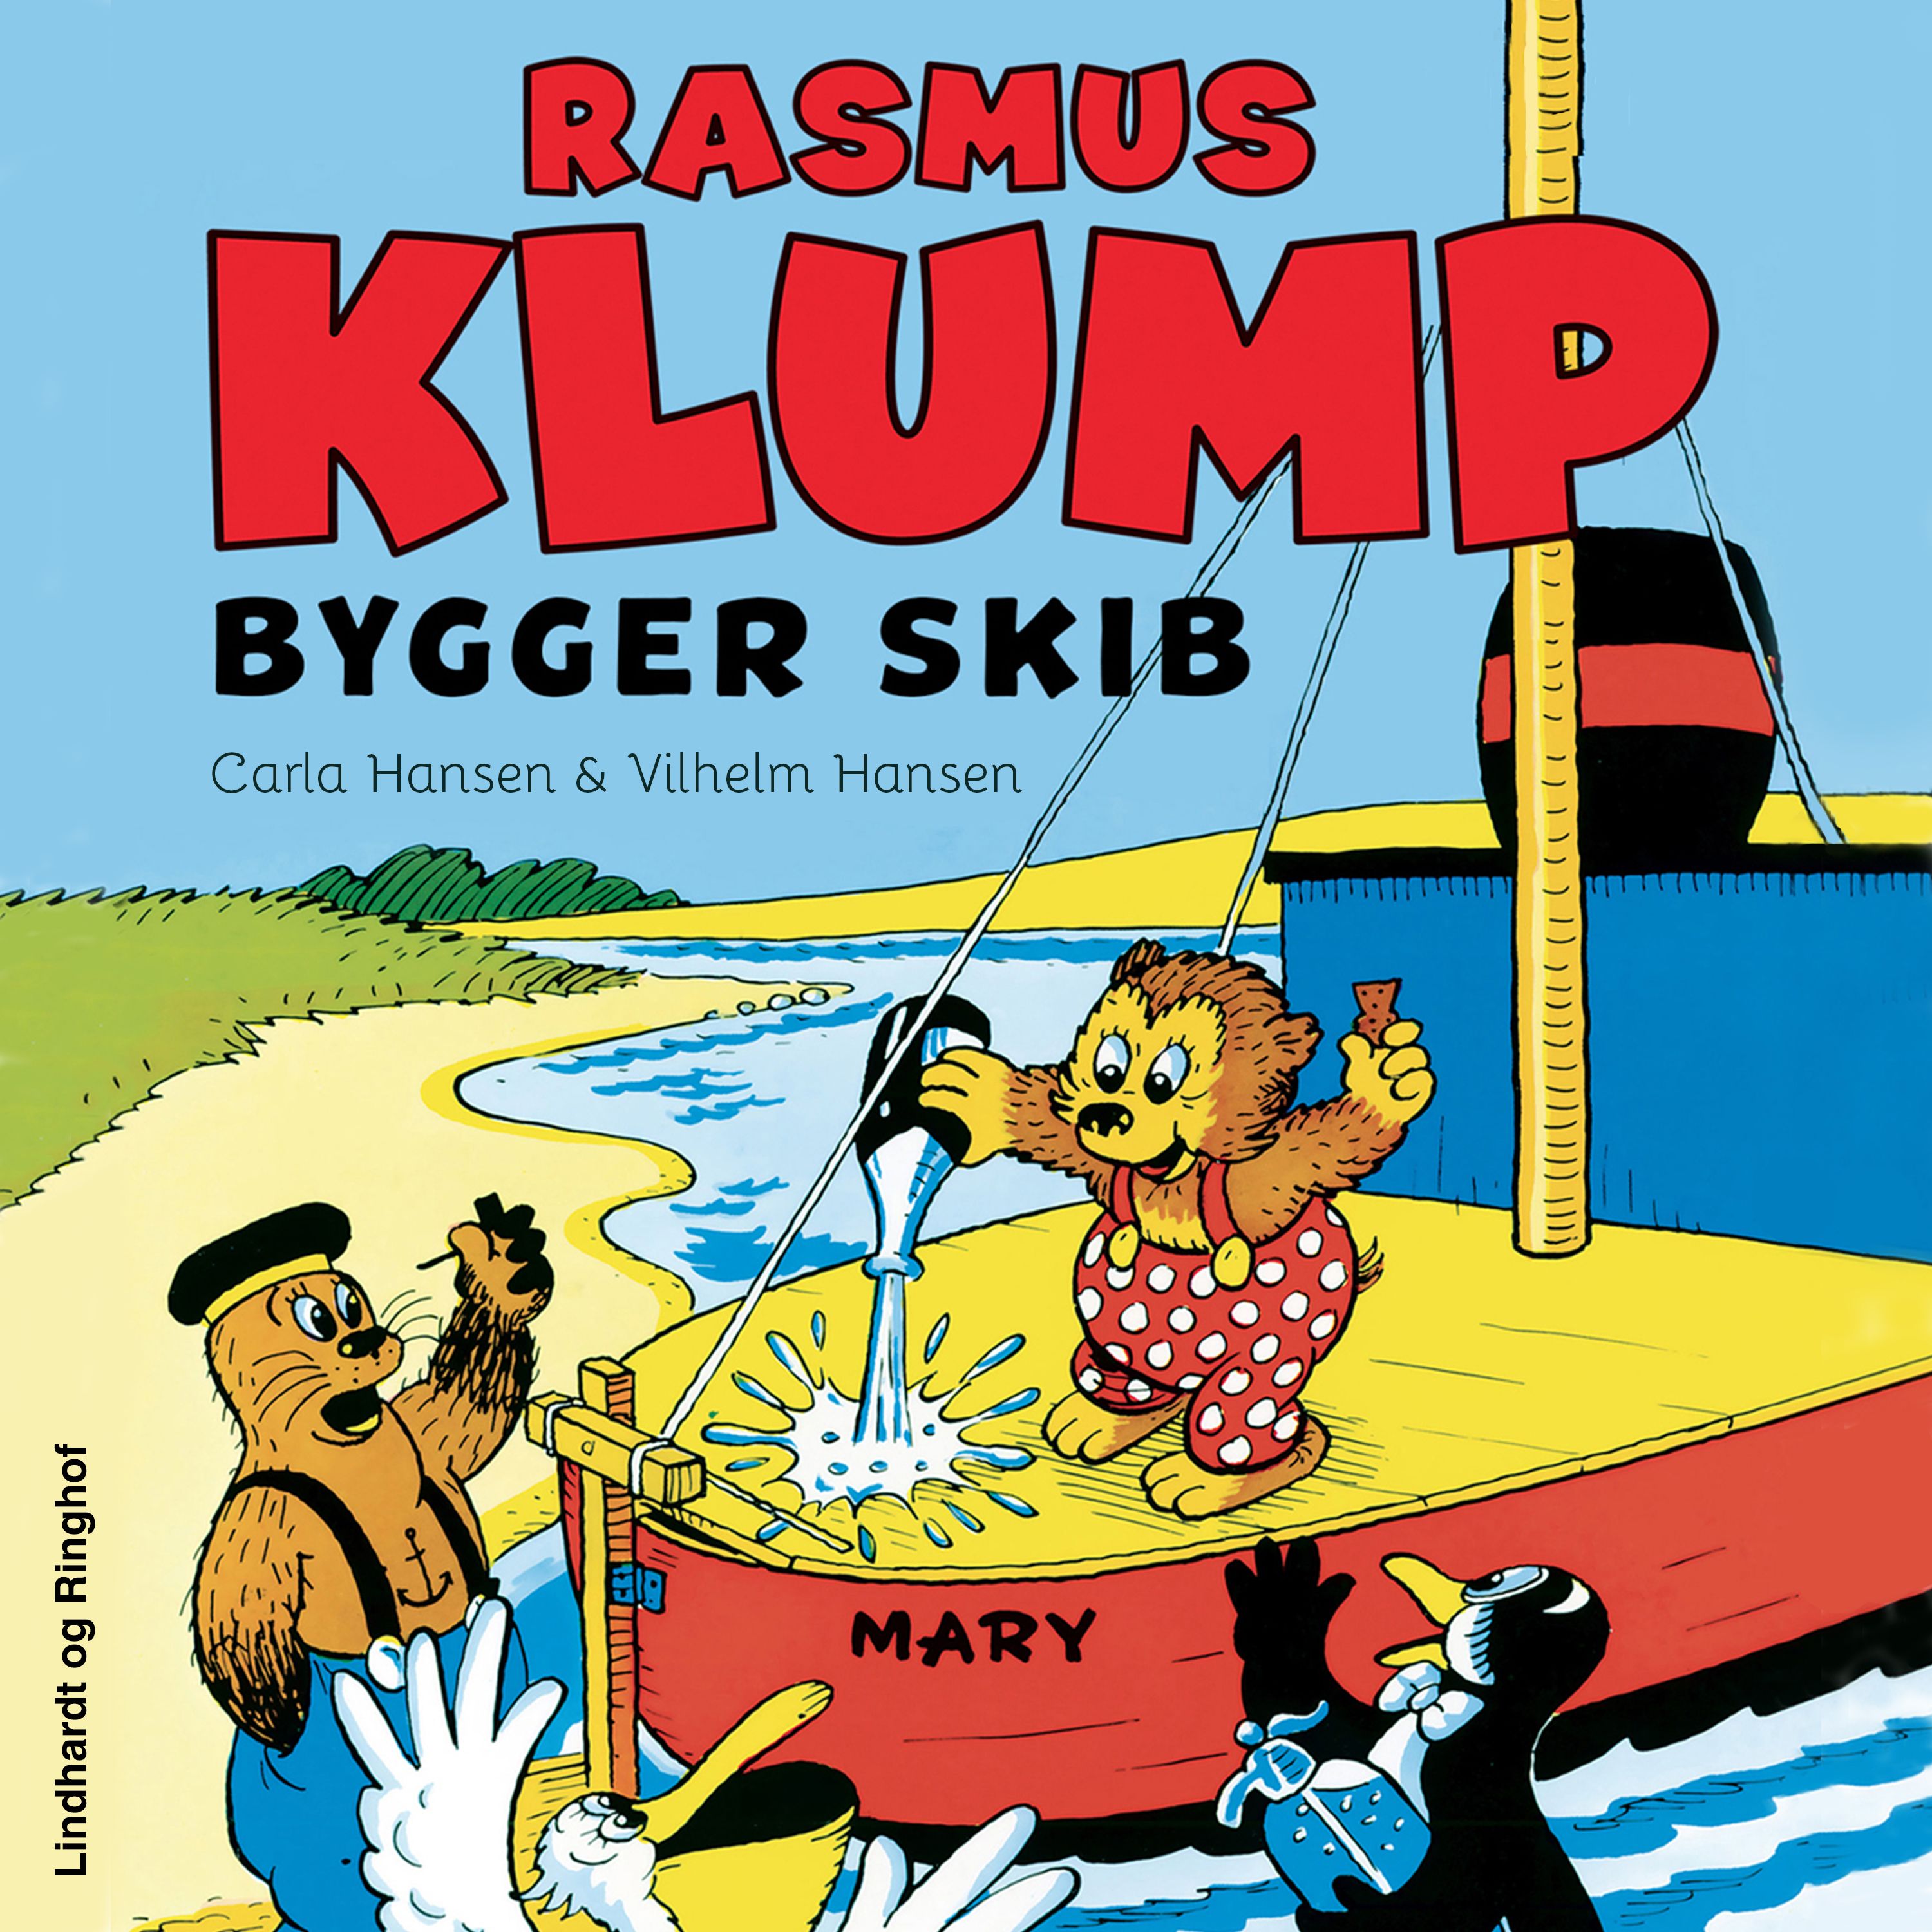 Rasmus Klump bygger skib, audiobook by Carla Hansen, Vilhelm Hansen